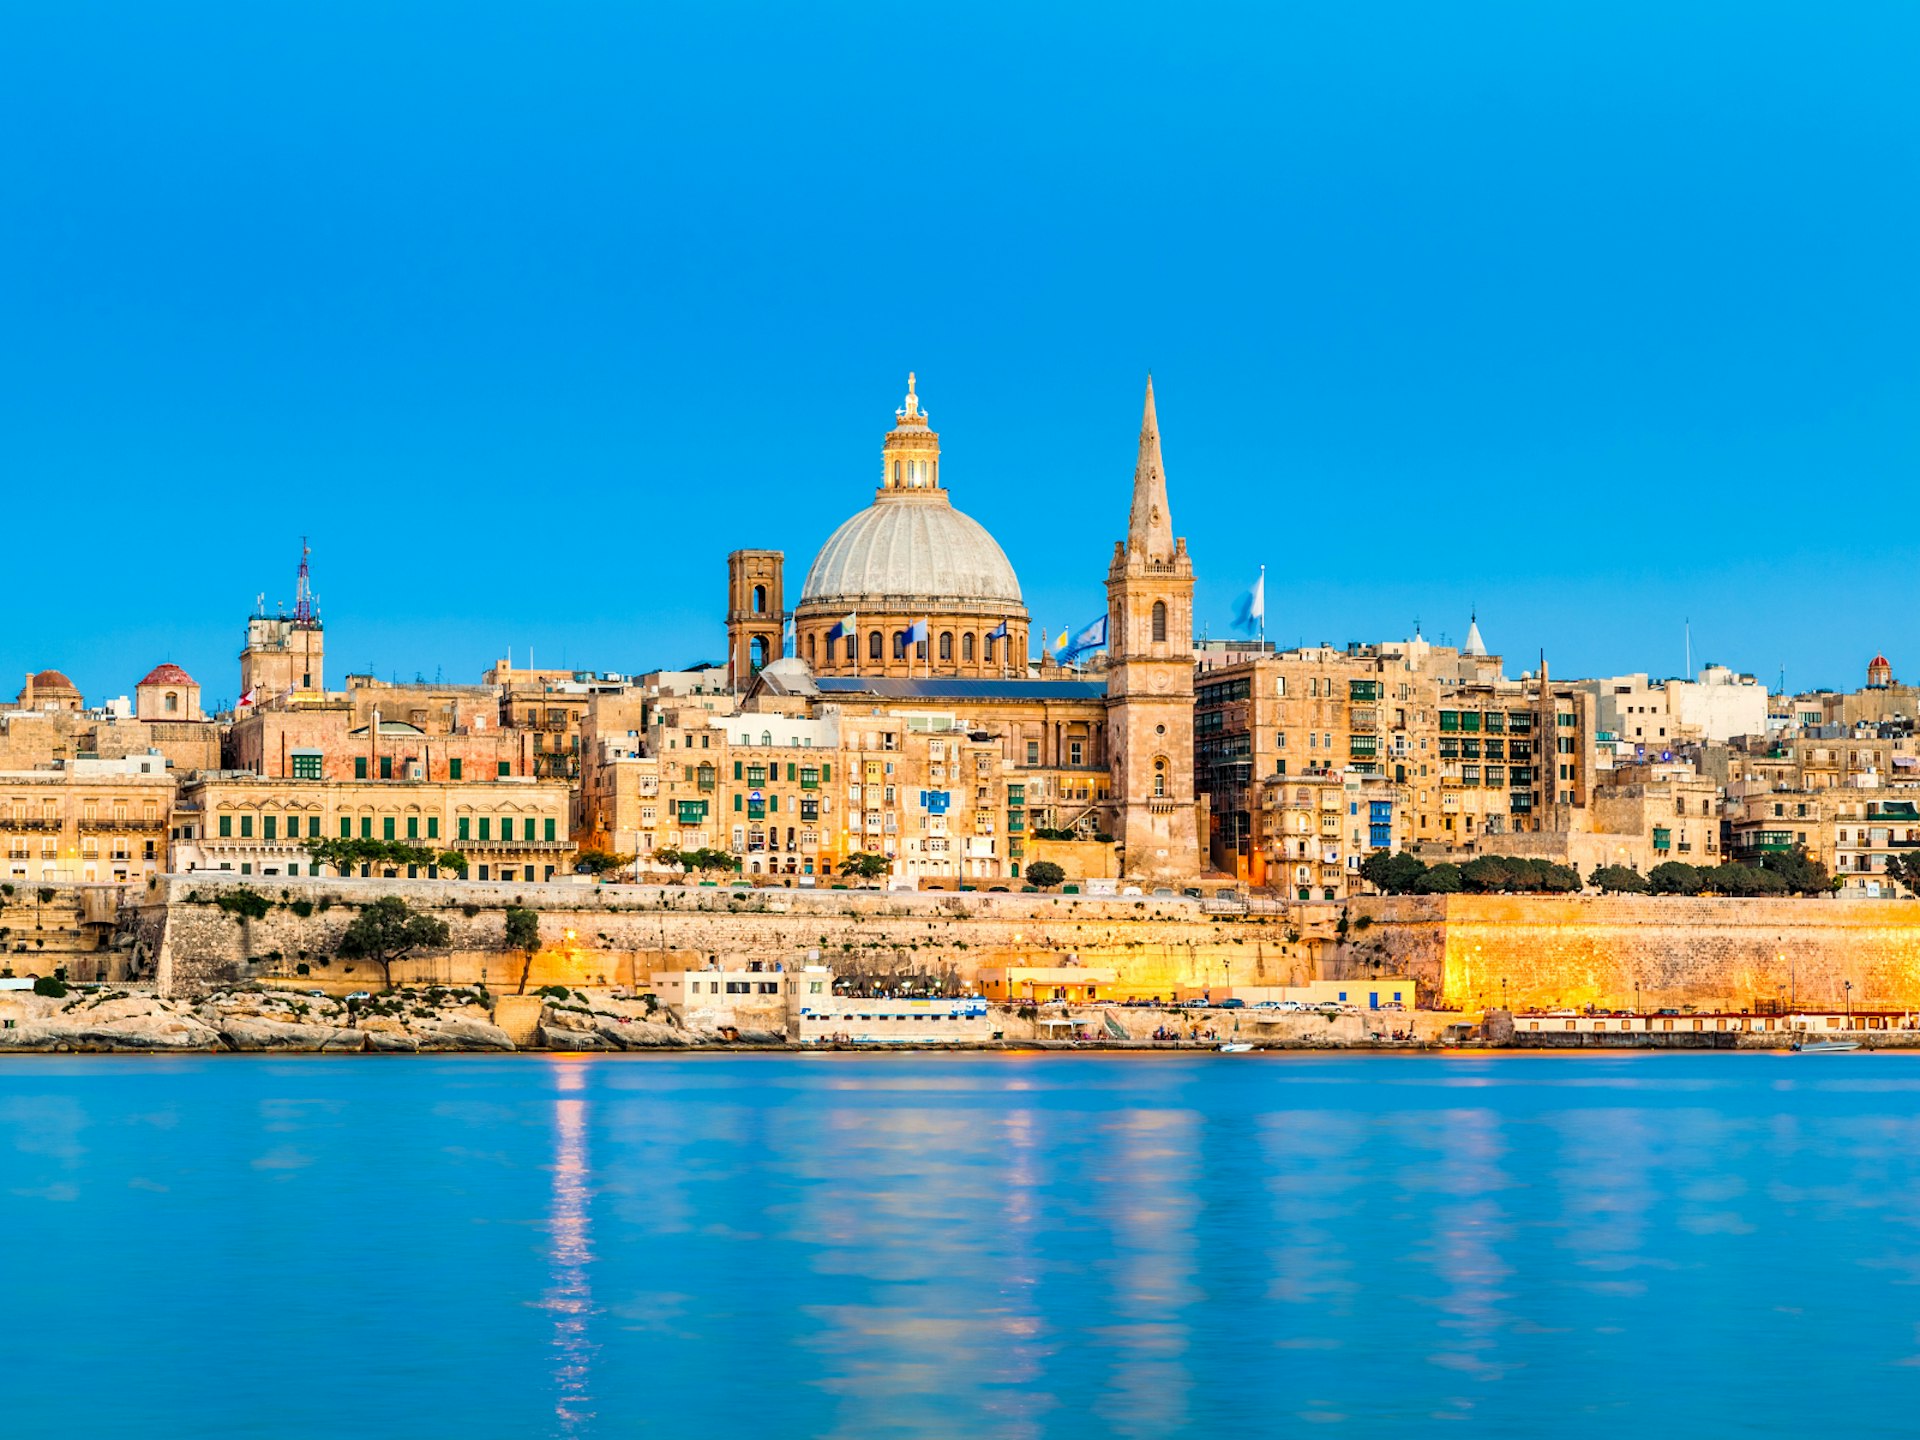 The skyline of Malta's capital city glows golden in the winter sunlight 